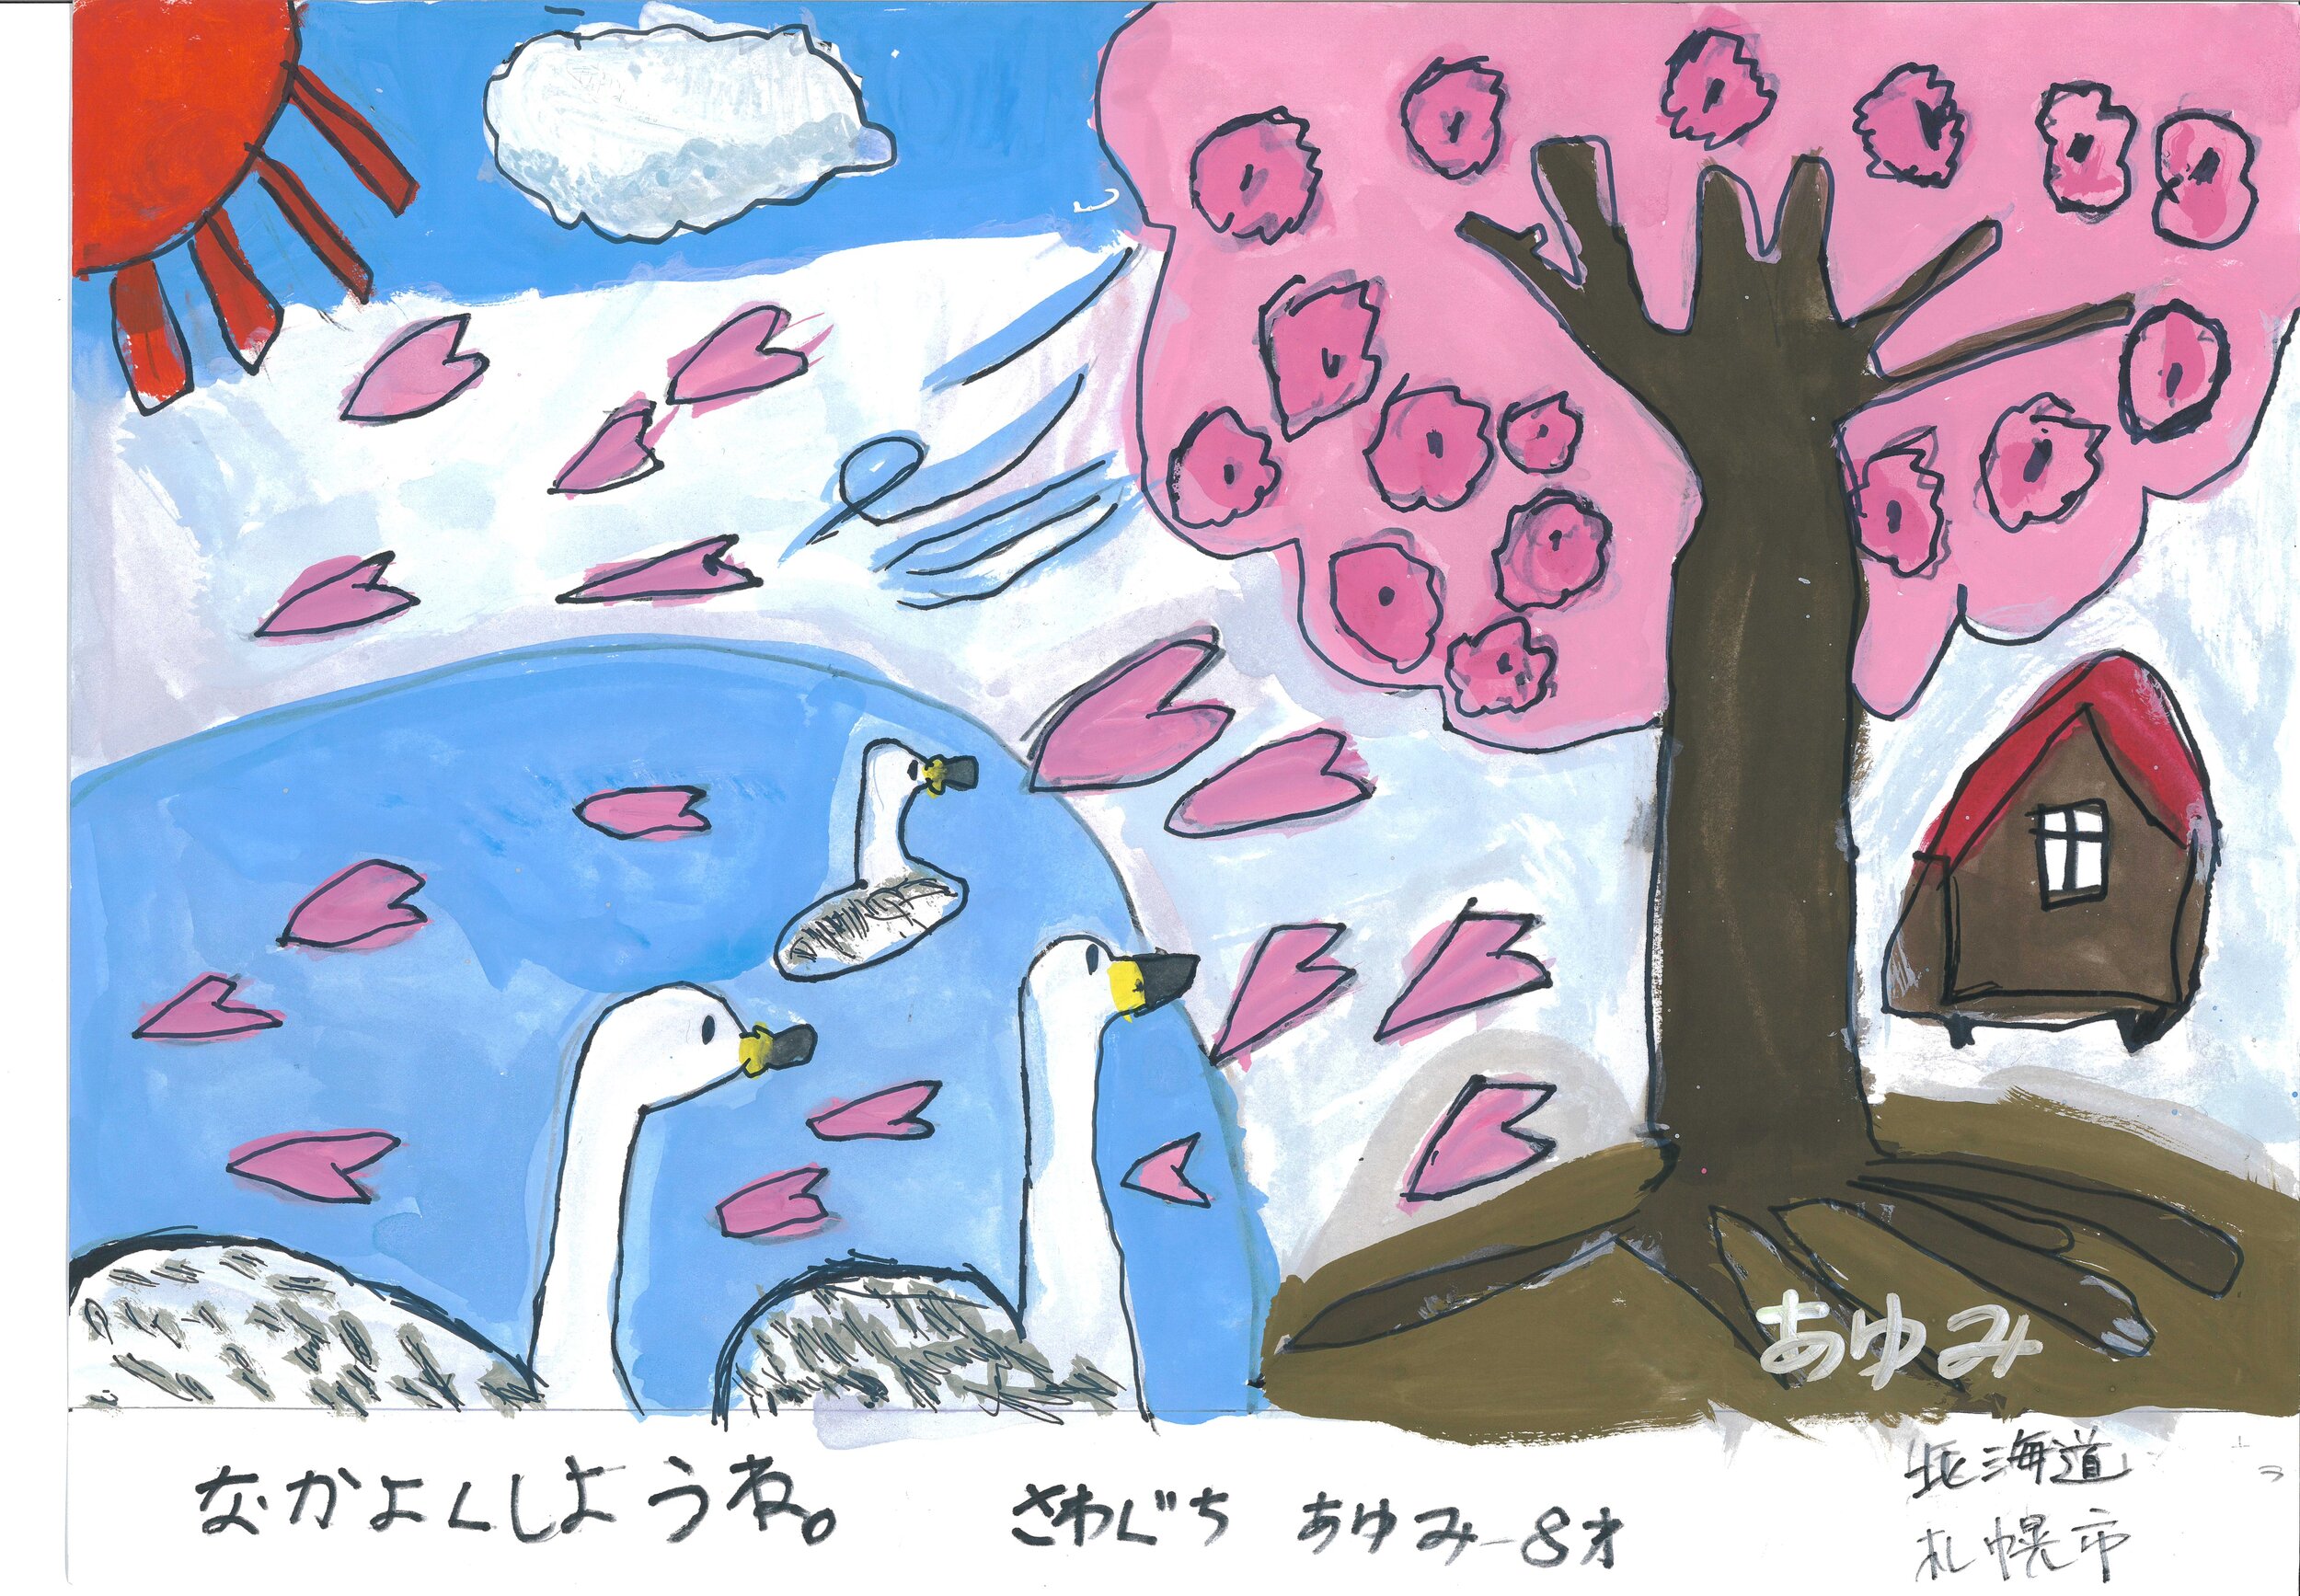 Cherry Blossom Art by Japanese student from Hokkaido